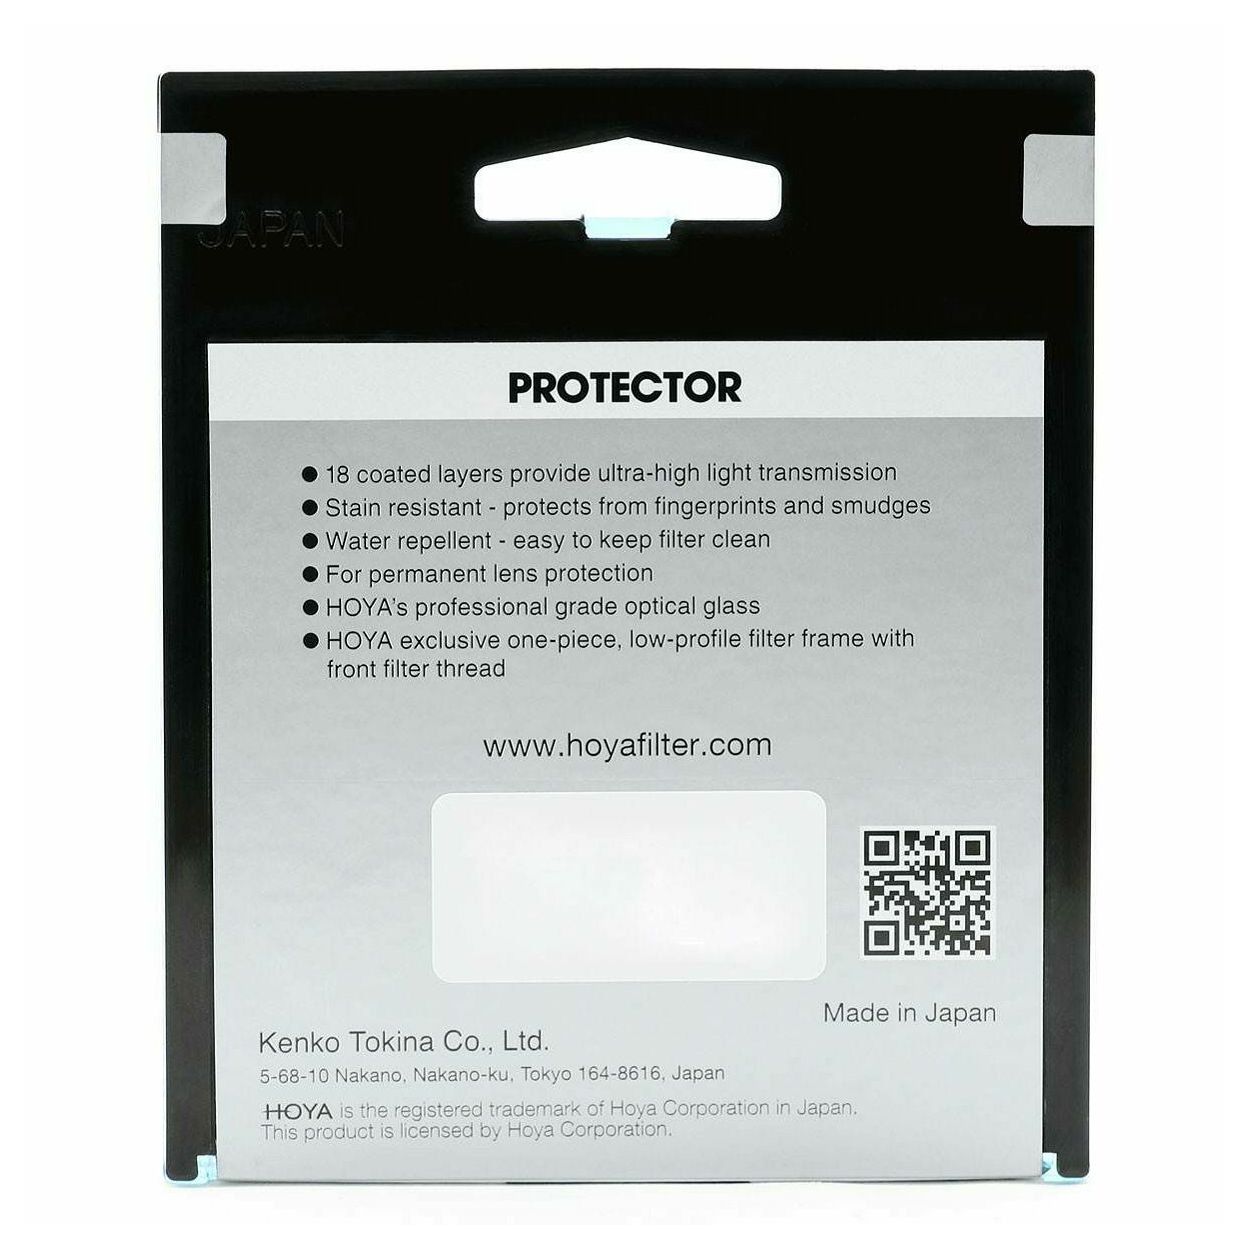 Hoya Fusion One Protector 52mm zaštitni filter